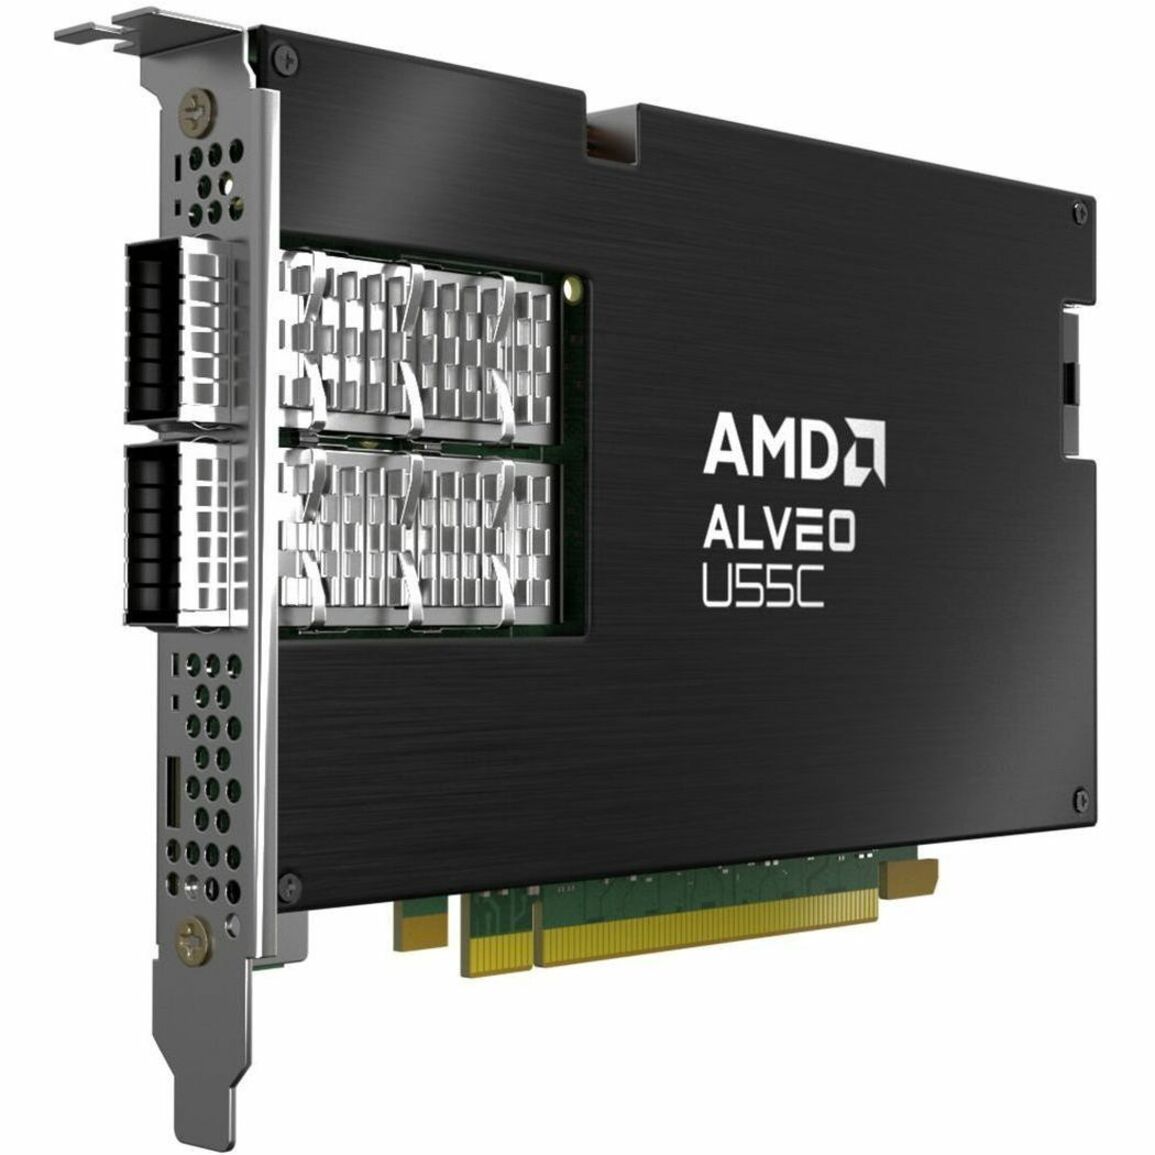 AMD Alveo U55C High Performance Compute Card (A-U55C-P00G-PQ-G)